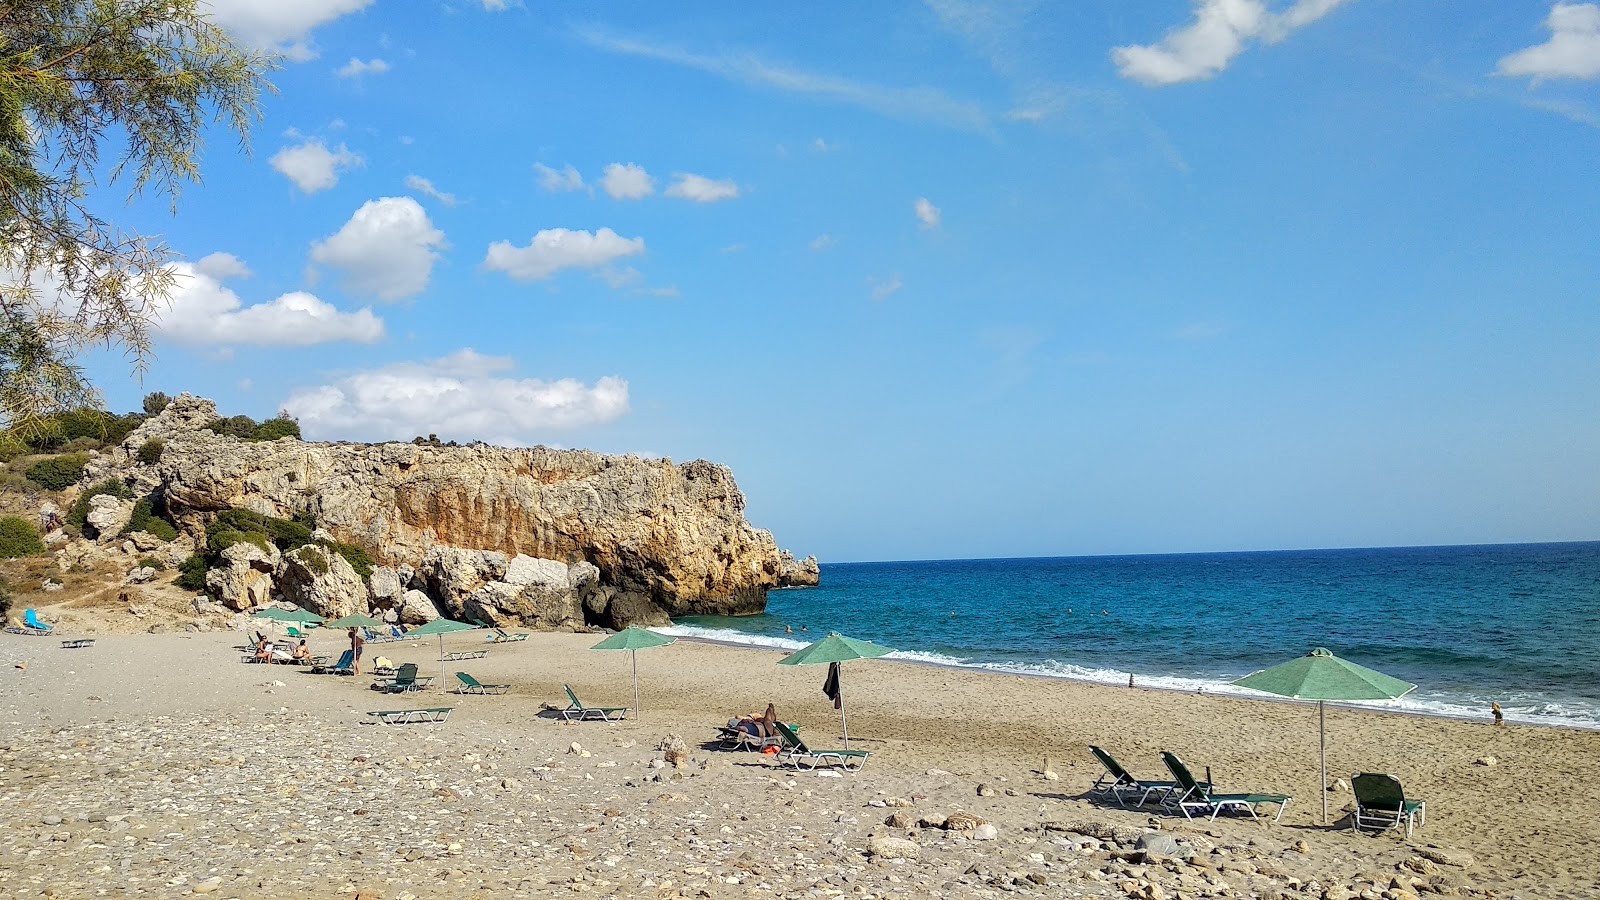 Fotografija Peristeres beach z sivi kamenček površino